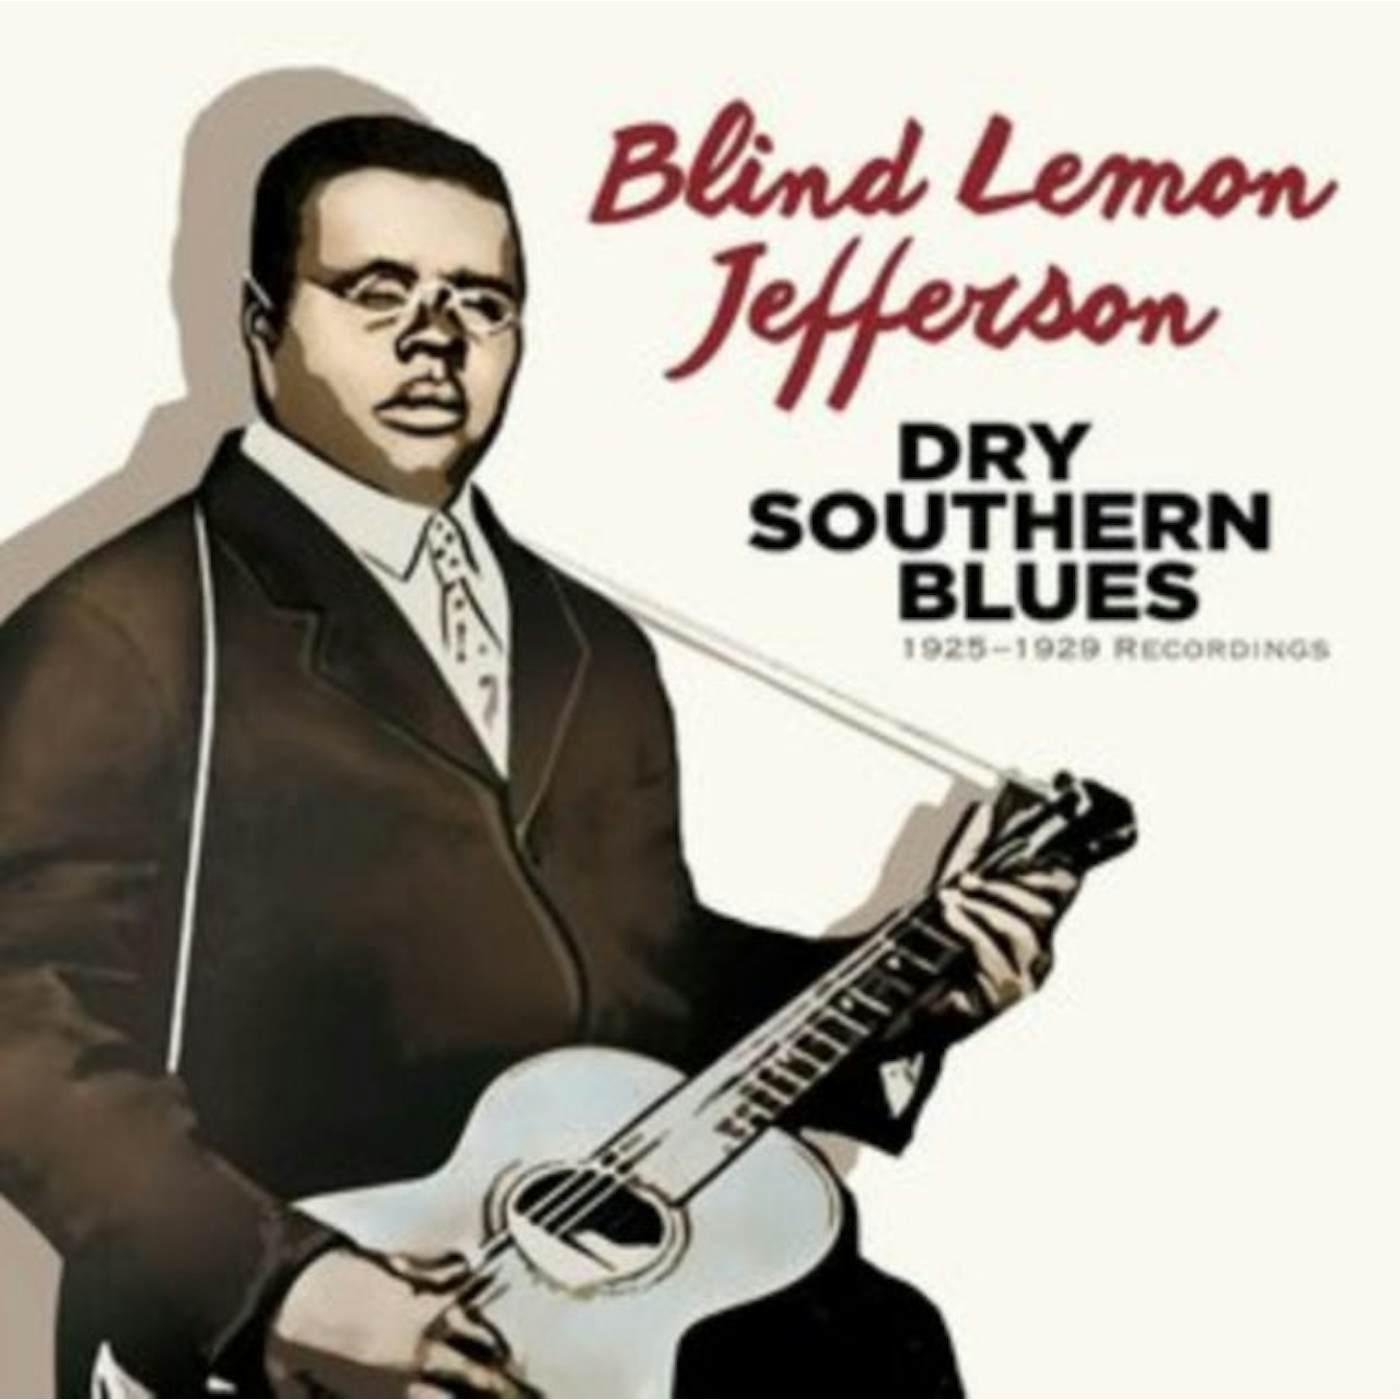 Blind Lemon Jefferson CD - Dry Southern Blues: 19 25-19 29 Recordings